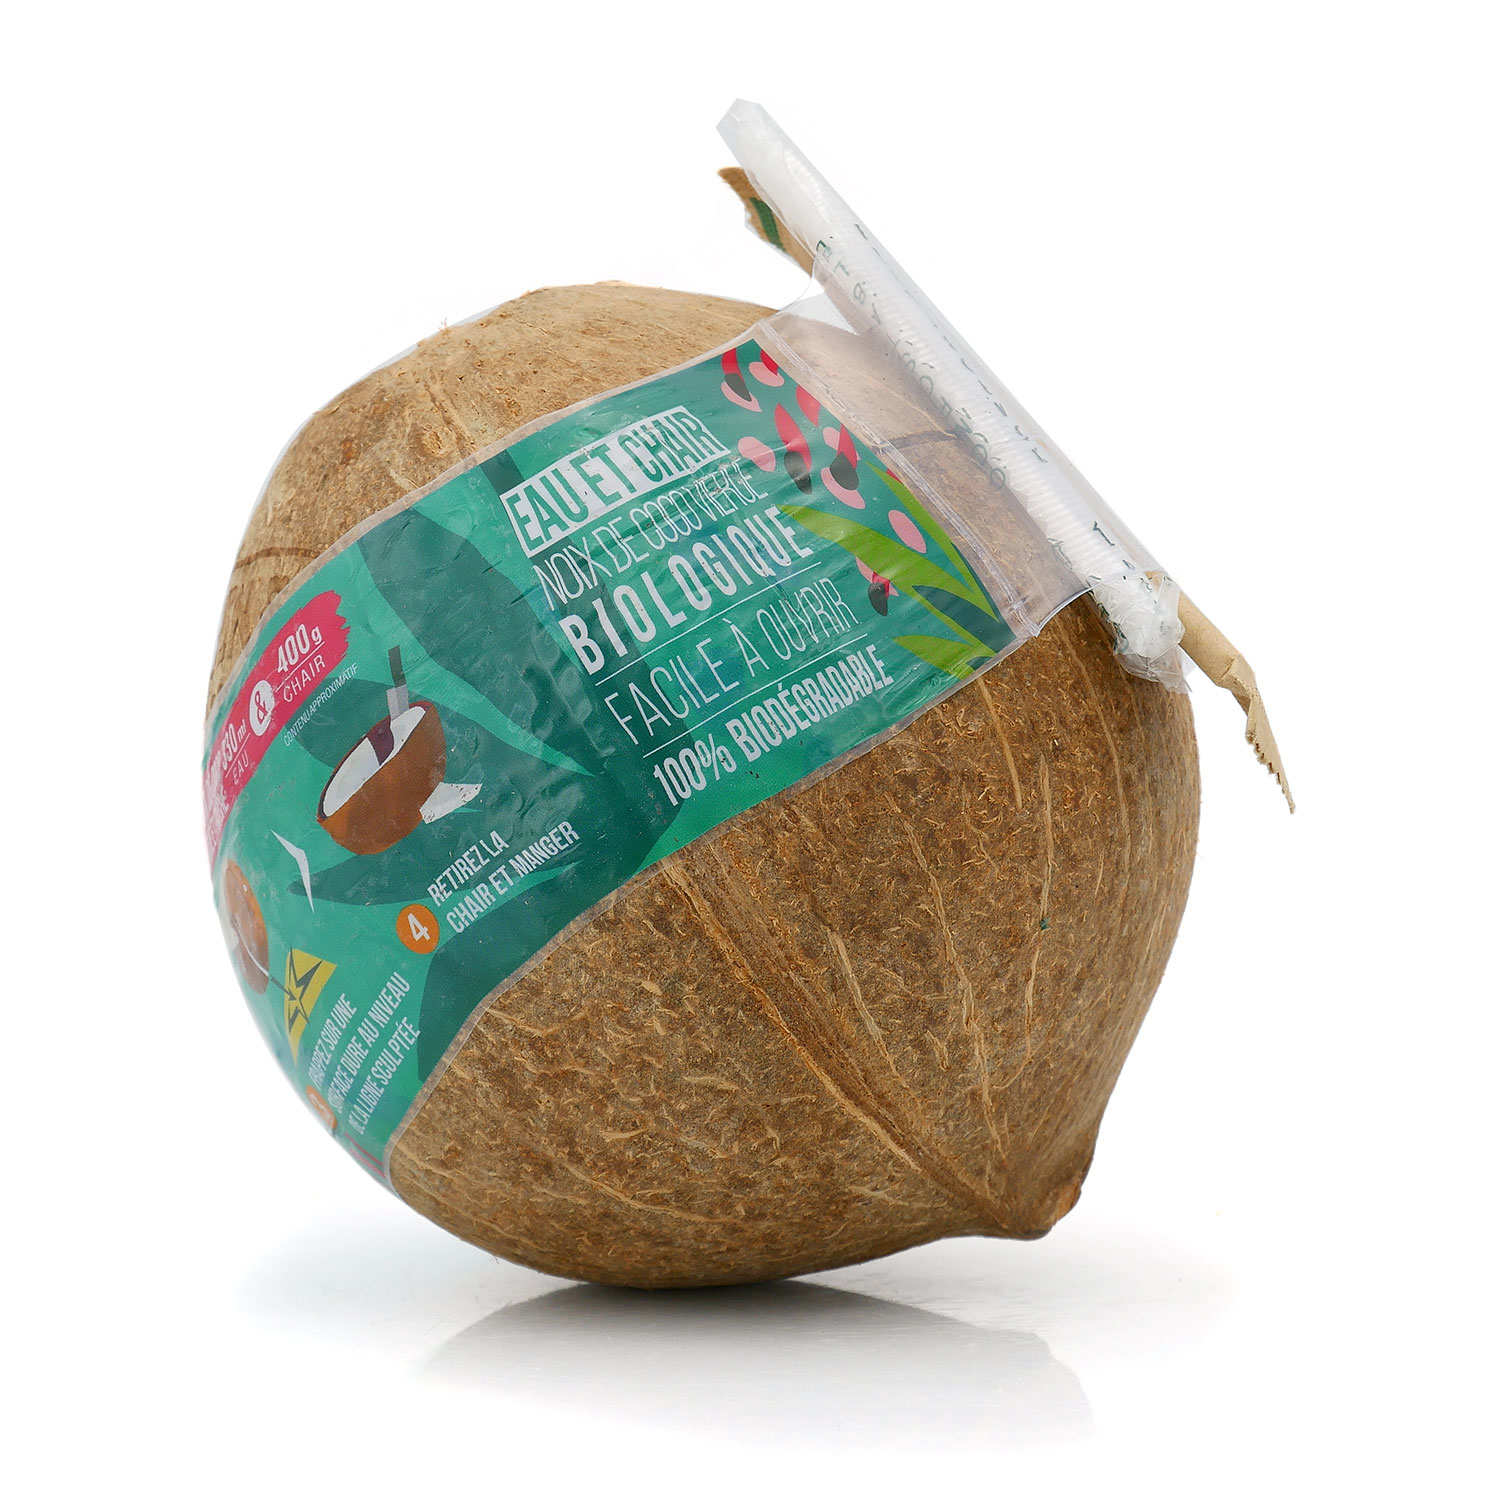 Huile vierge de noix de coco Bio en vente chez Lidl